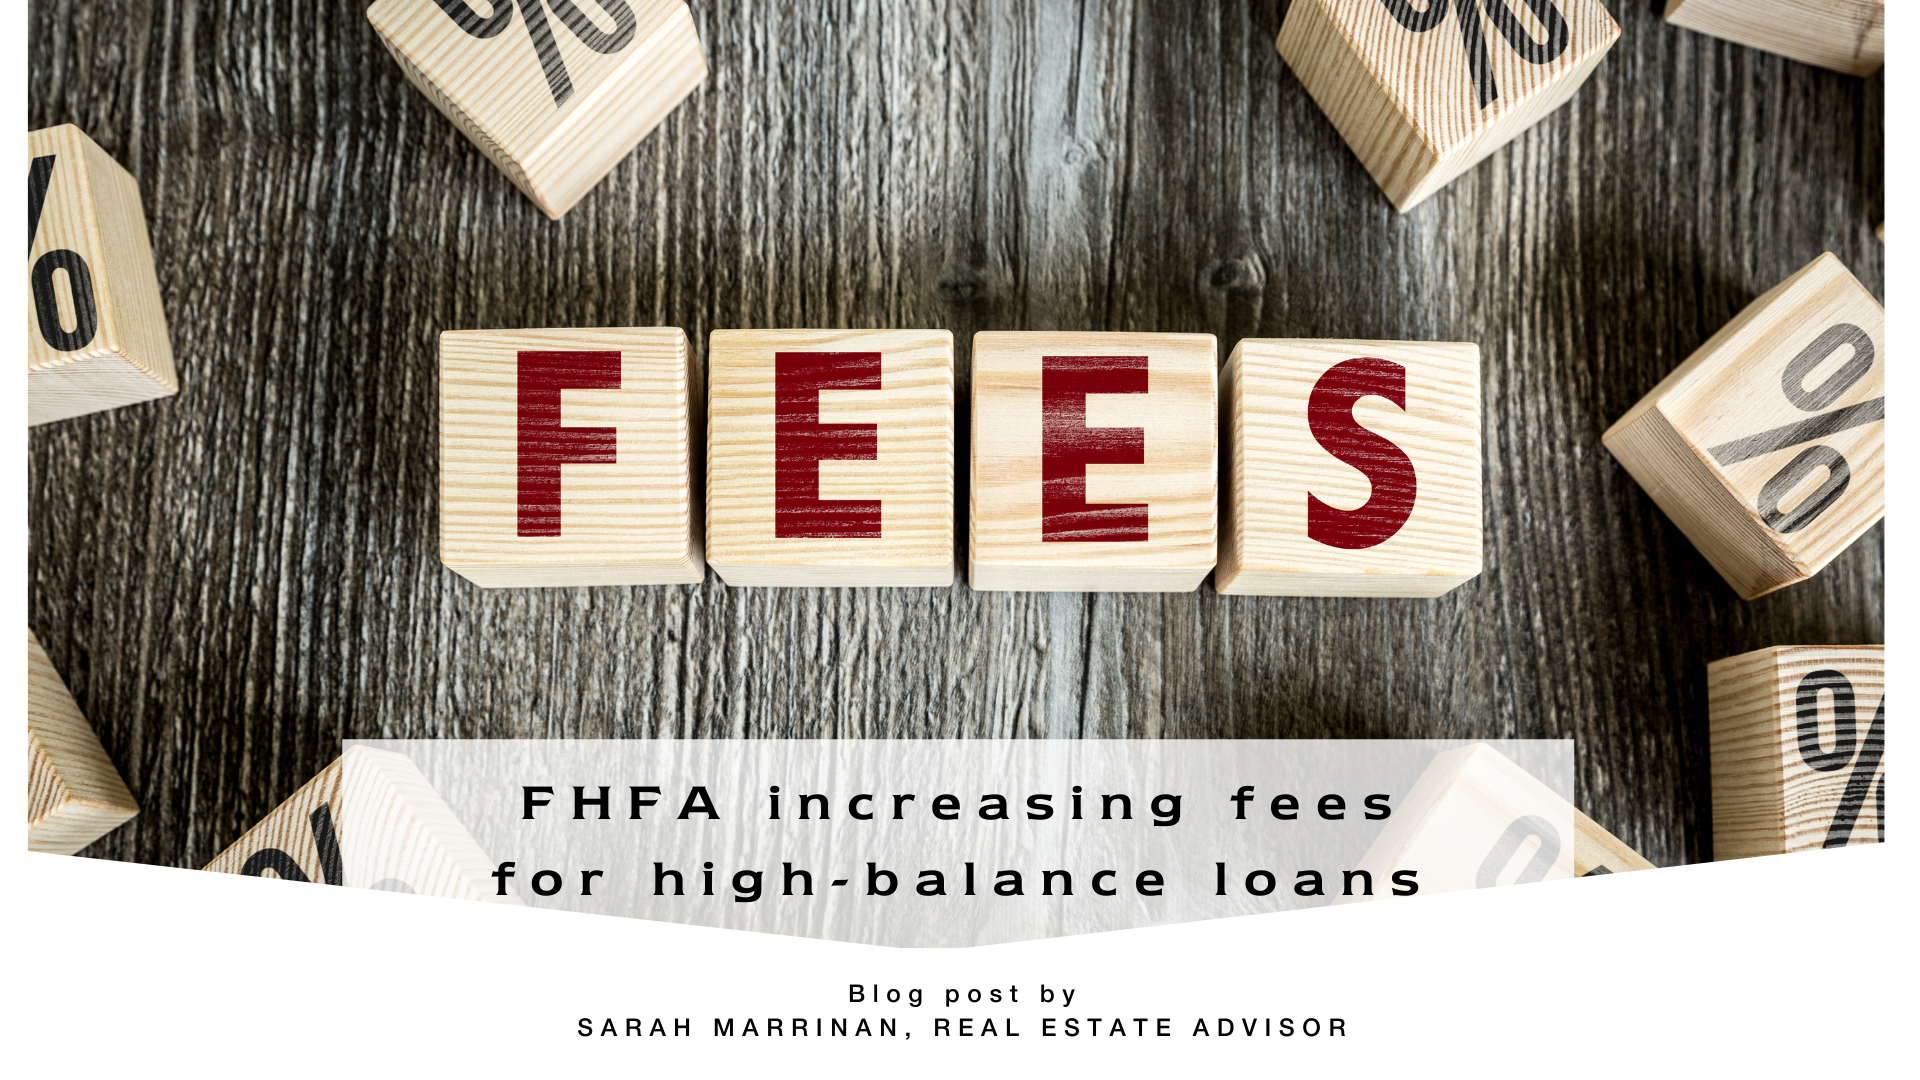 FHFA increasing fees for high-balance loans